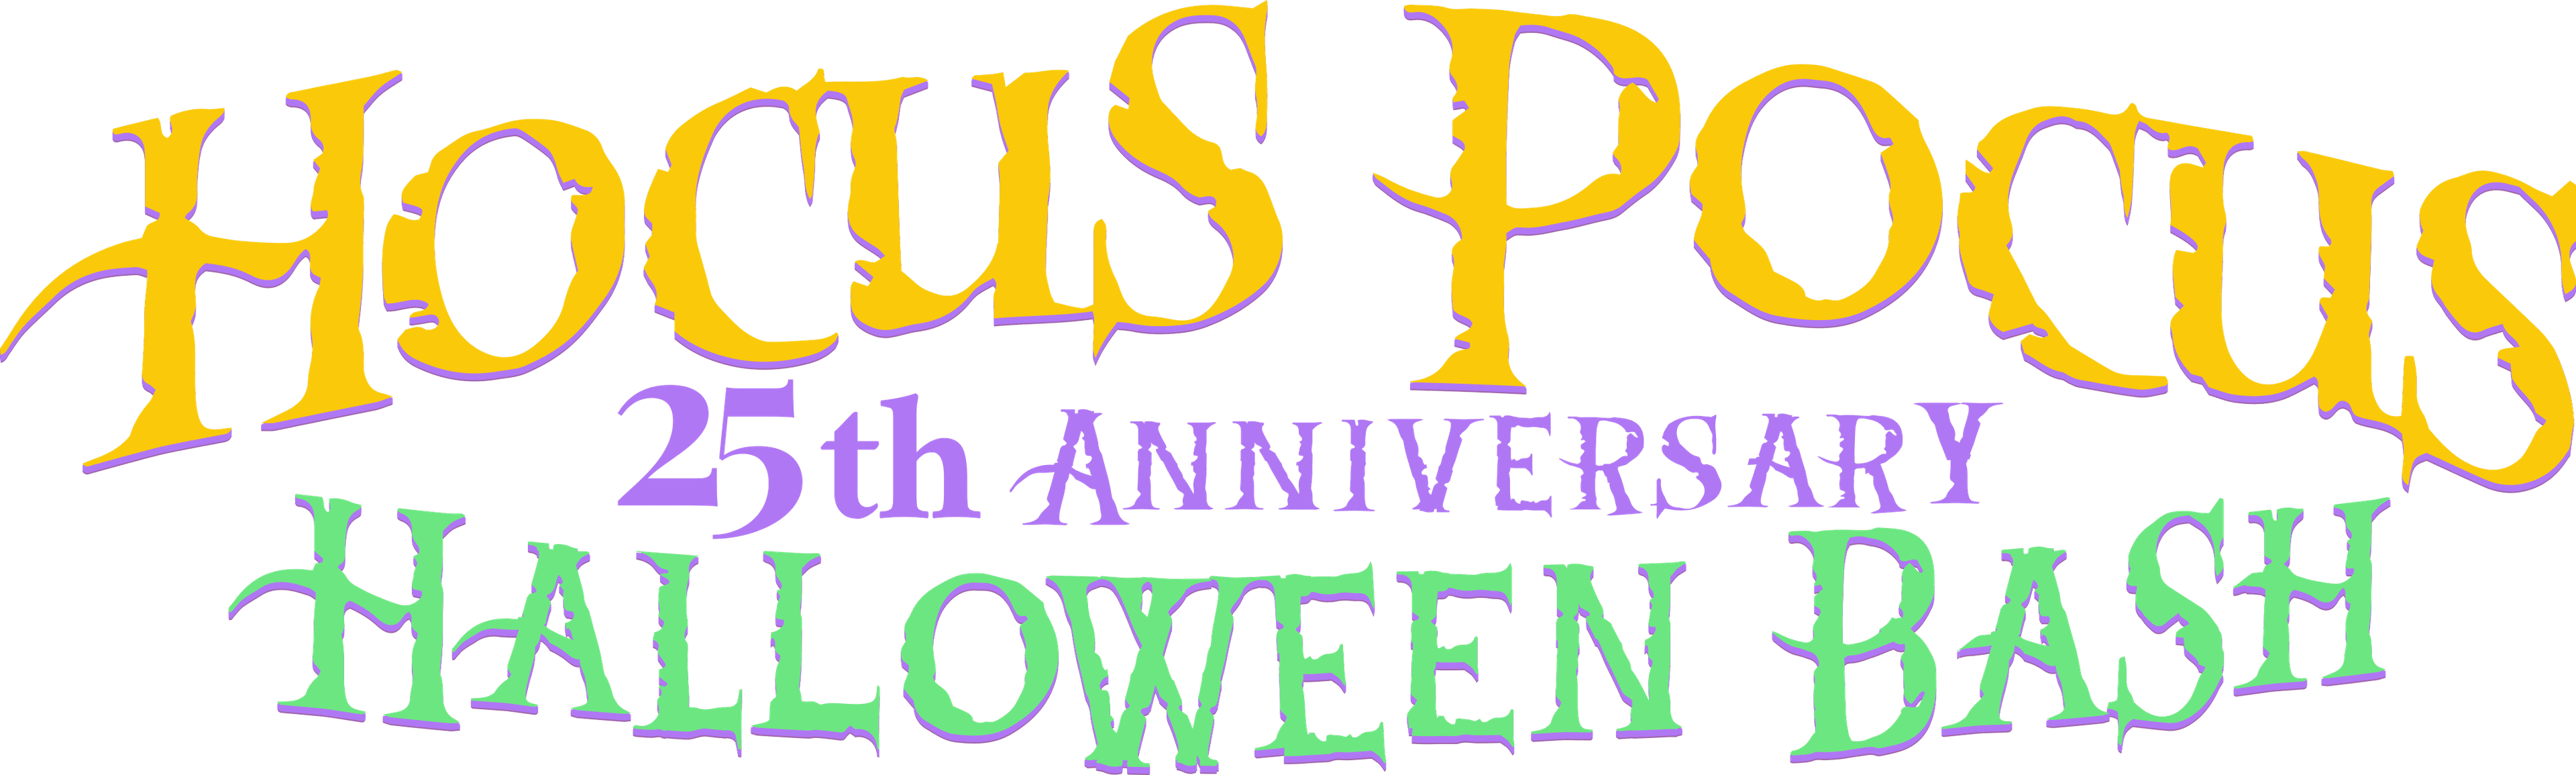 Hocus Pocus 25th Anniversary Halloween Bash logo